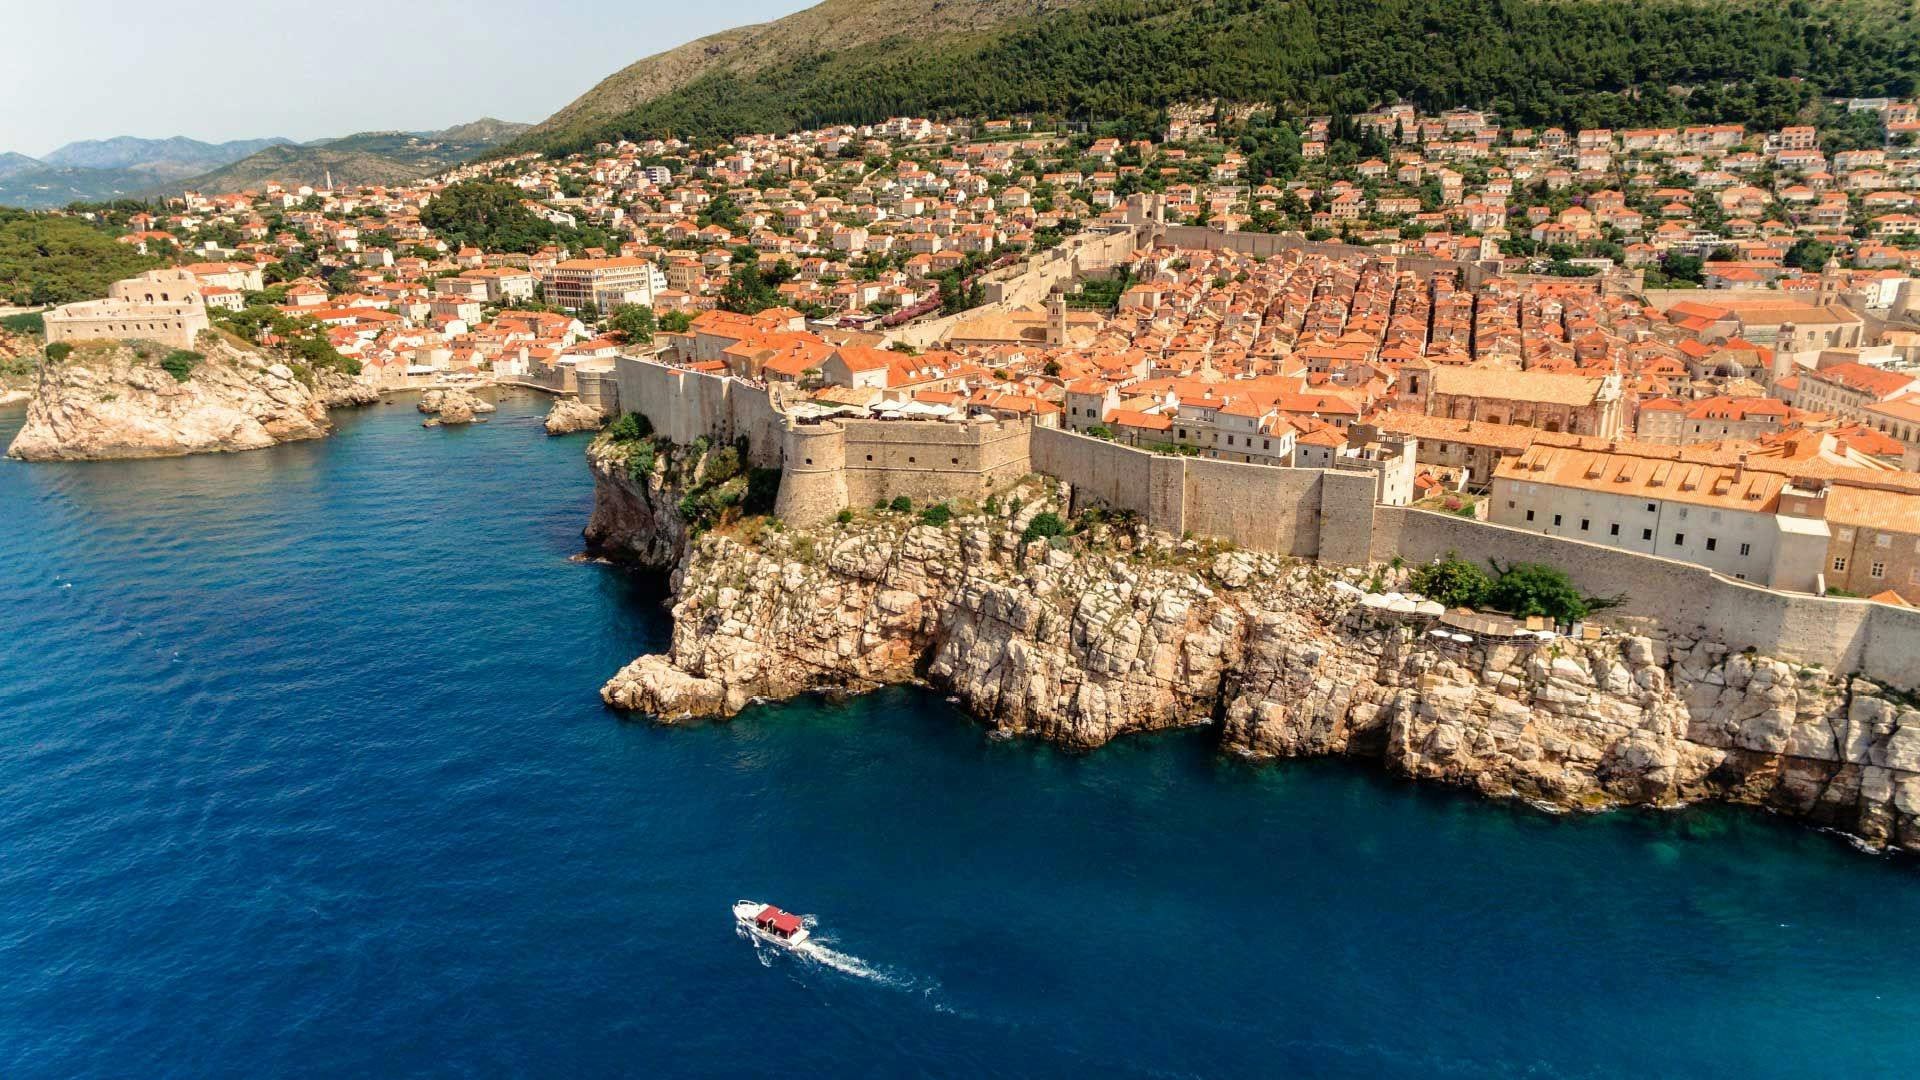 Dubrovnik Old Town walls in Croatia